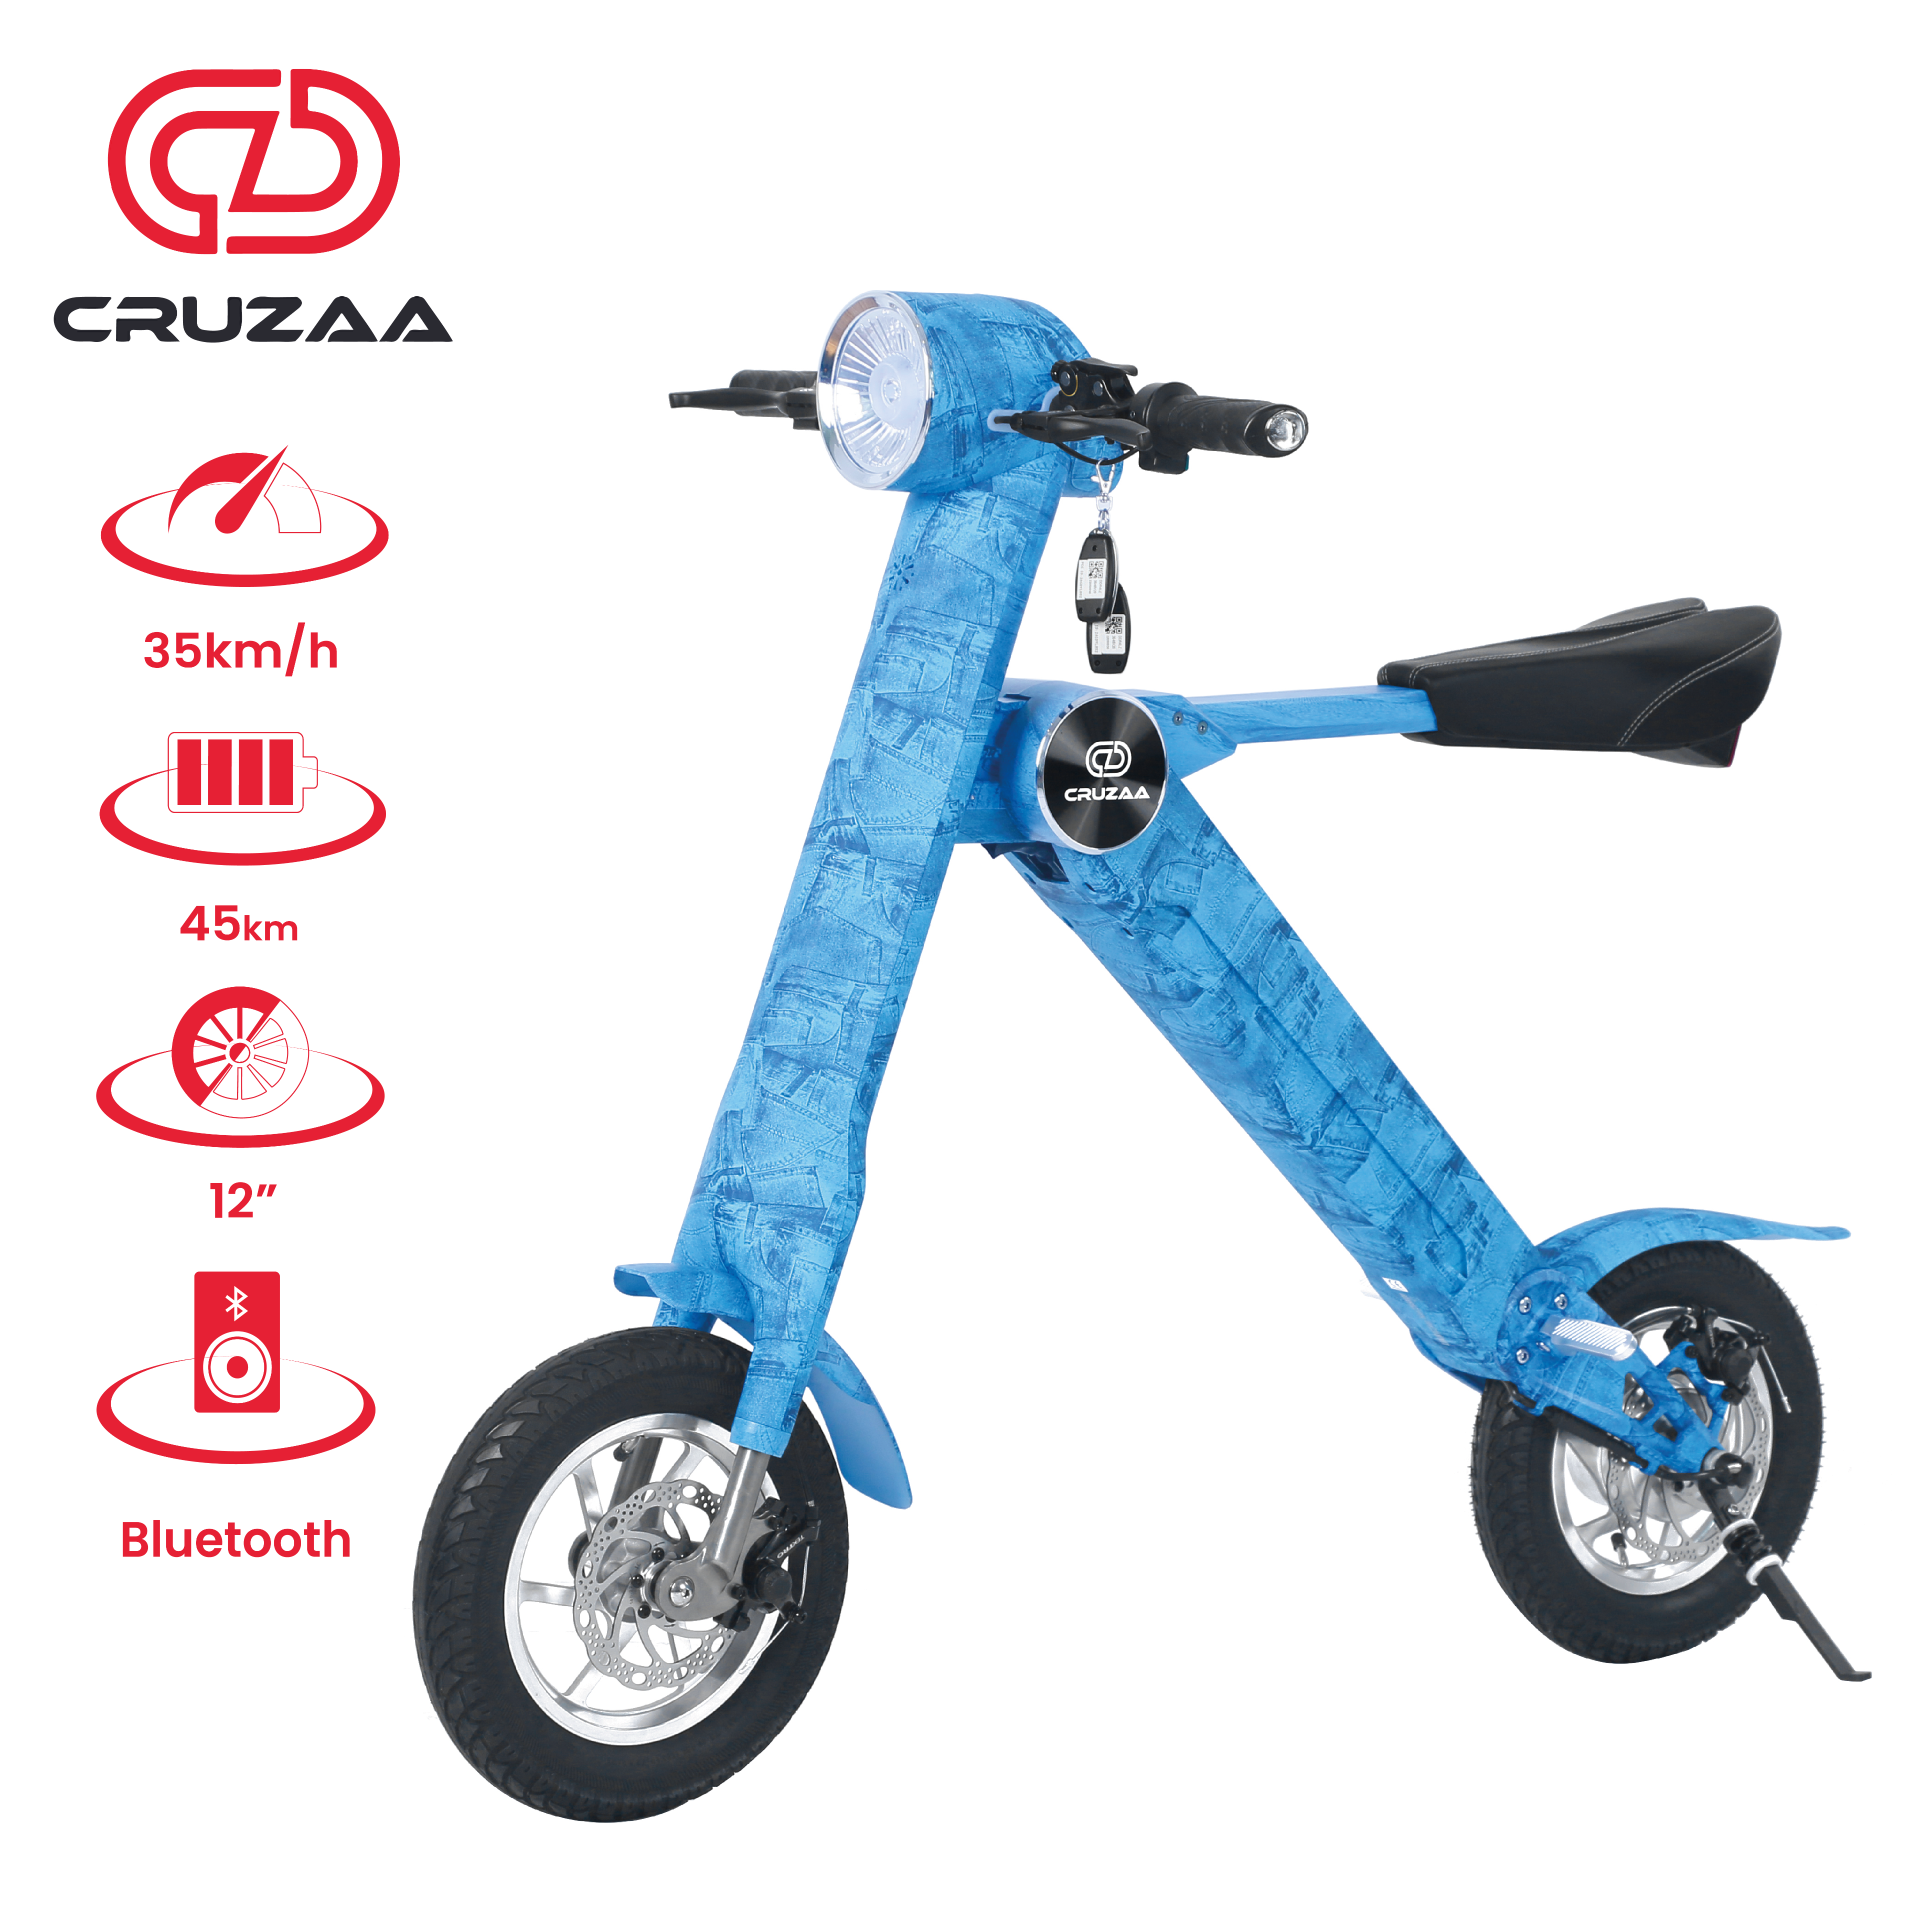 The Limited Edition Cruzaa Electric Scooter - 45km Range & 35kmh Top Speed Cruzaa Built in Bluetooth & Speakers +USB - Denim Blue